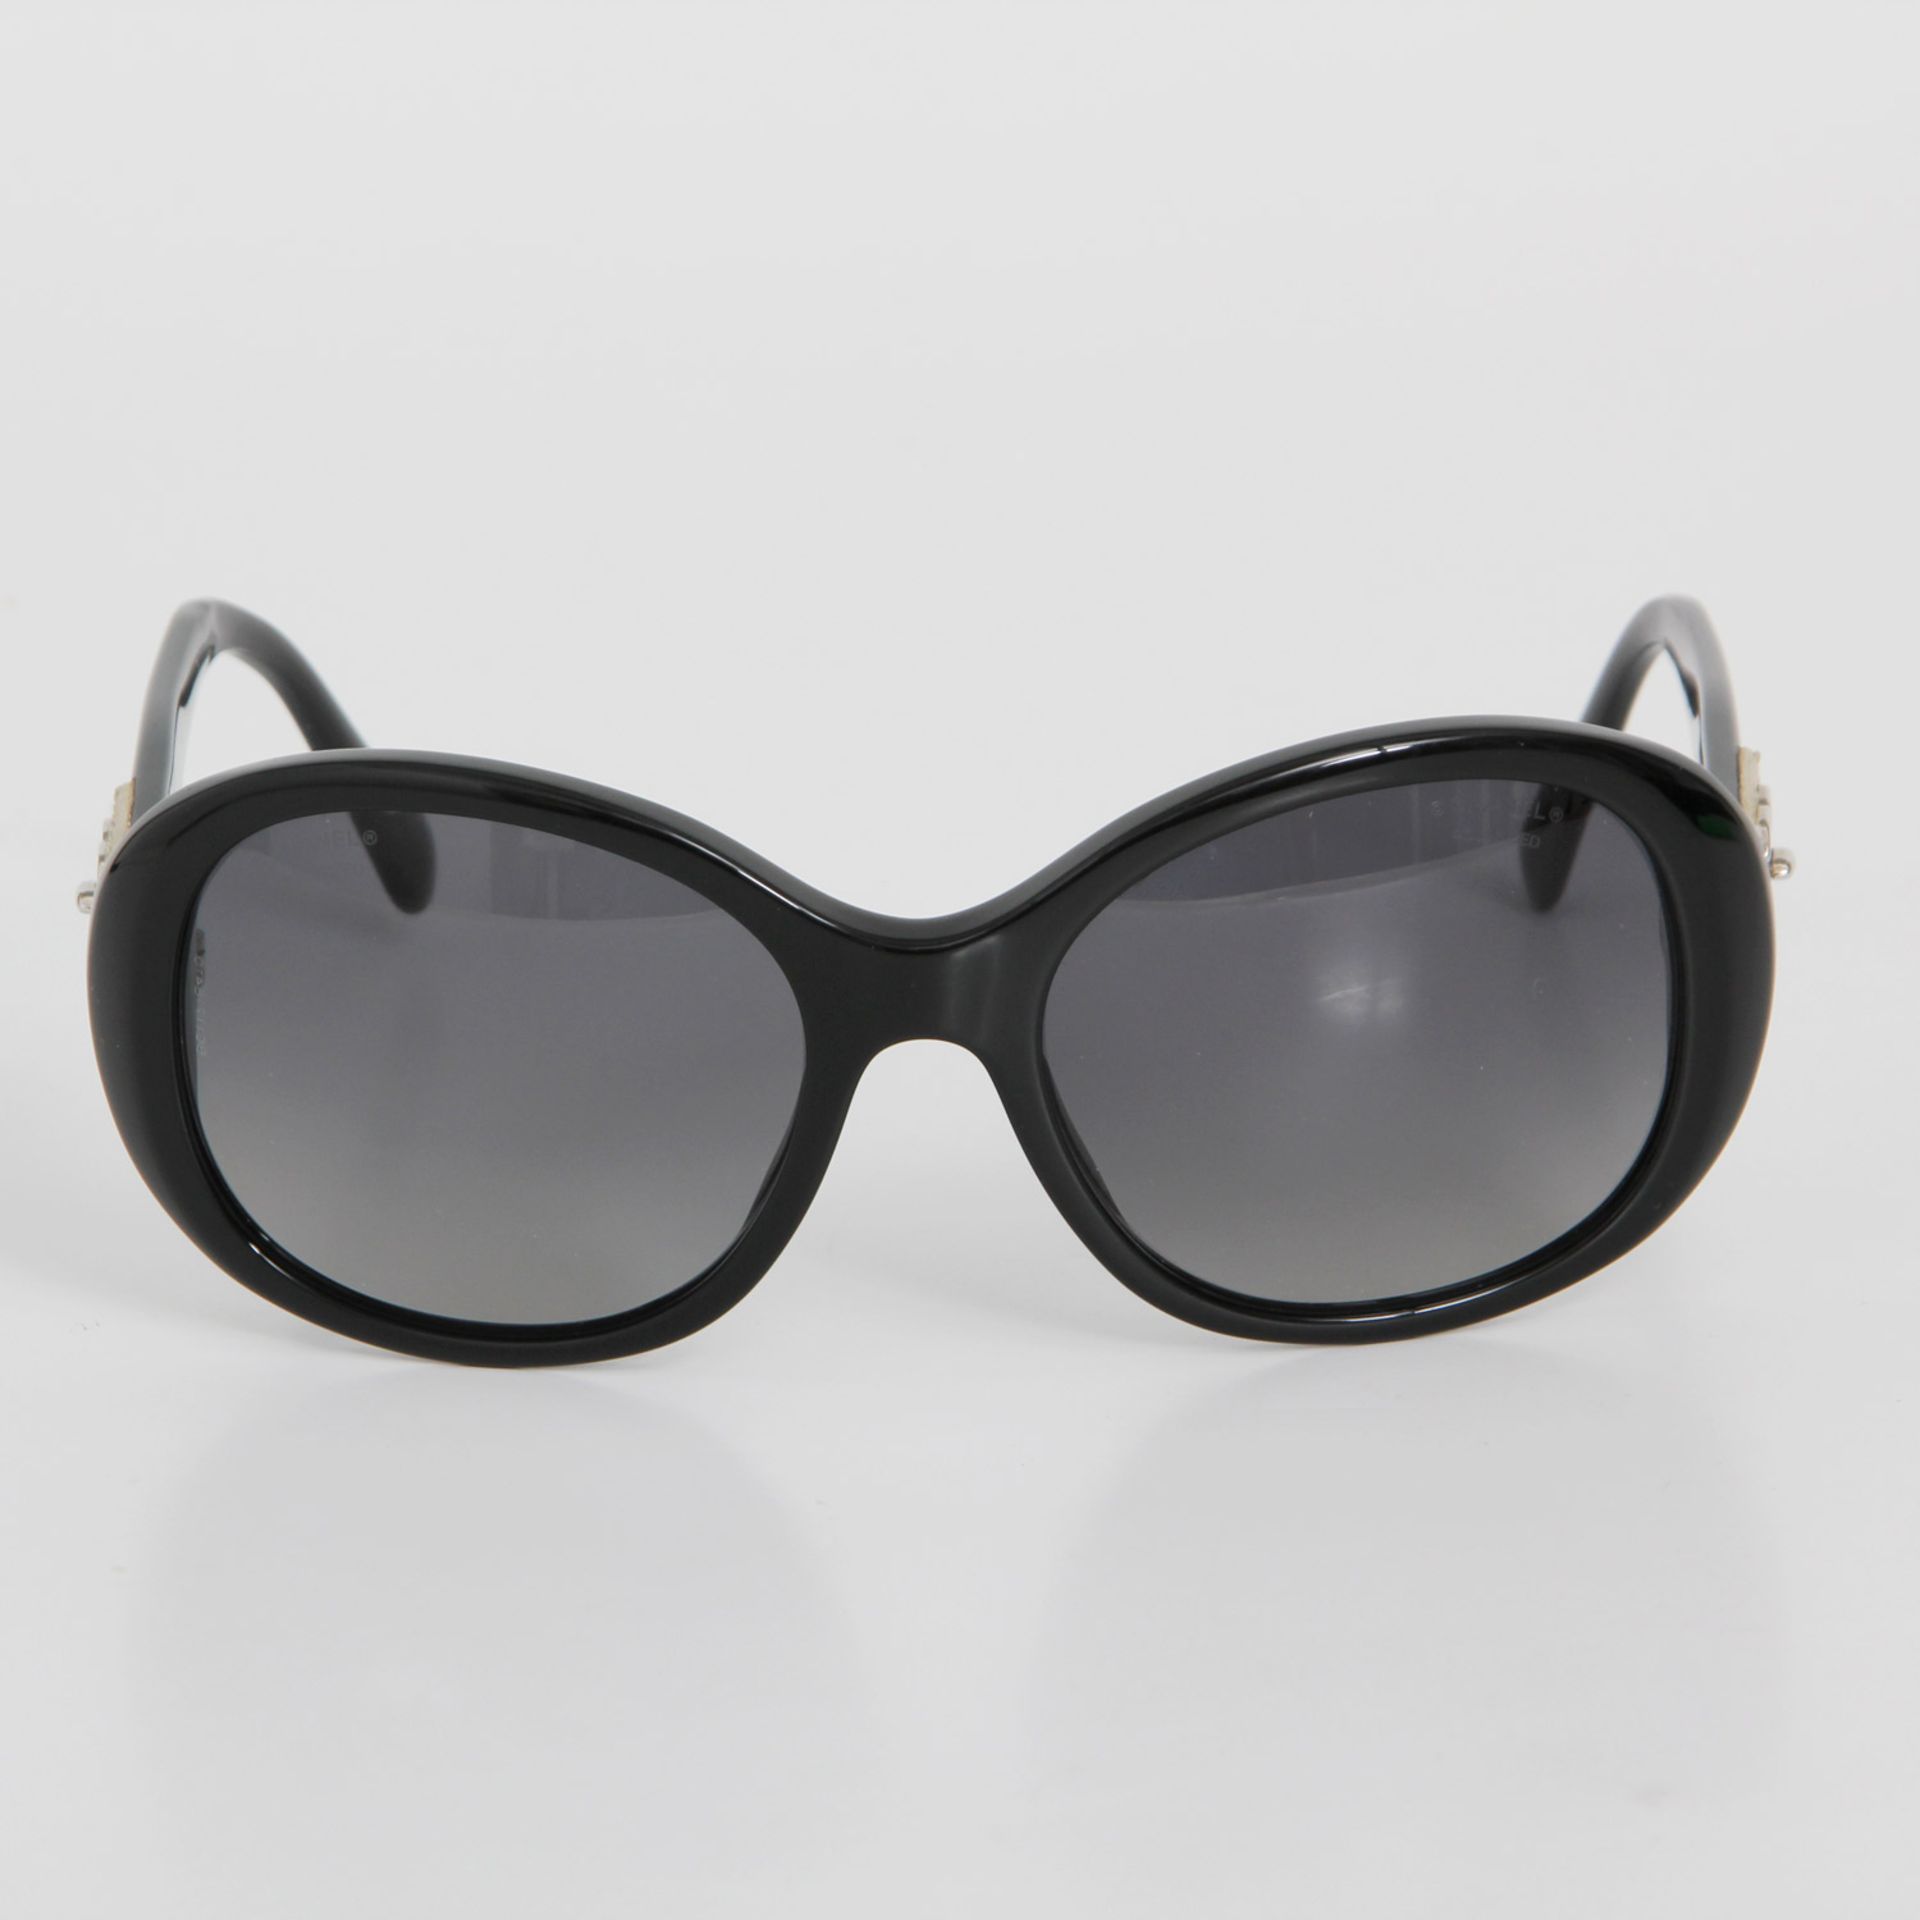 CHANEL elegante Sonnenbrille, NP: ca. 400.-; schwarz, zeitlose abgerundete Form, am Bügel